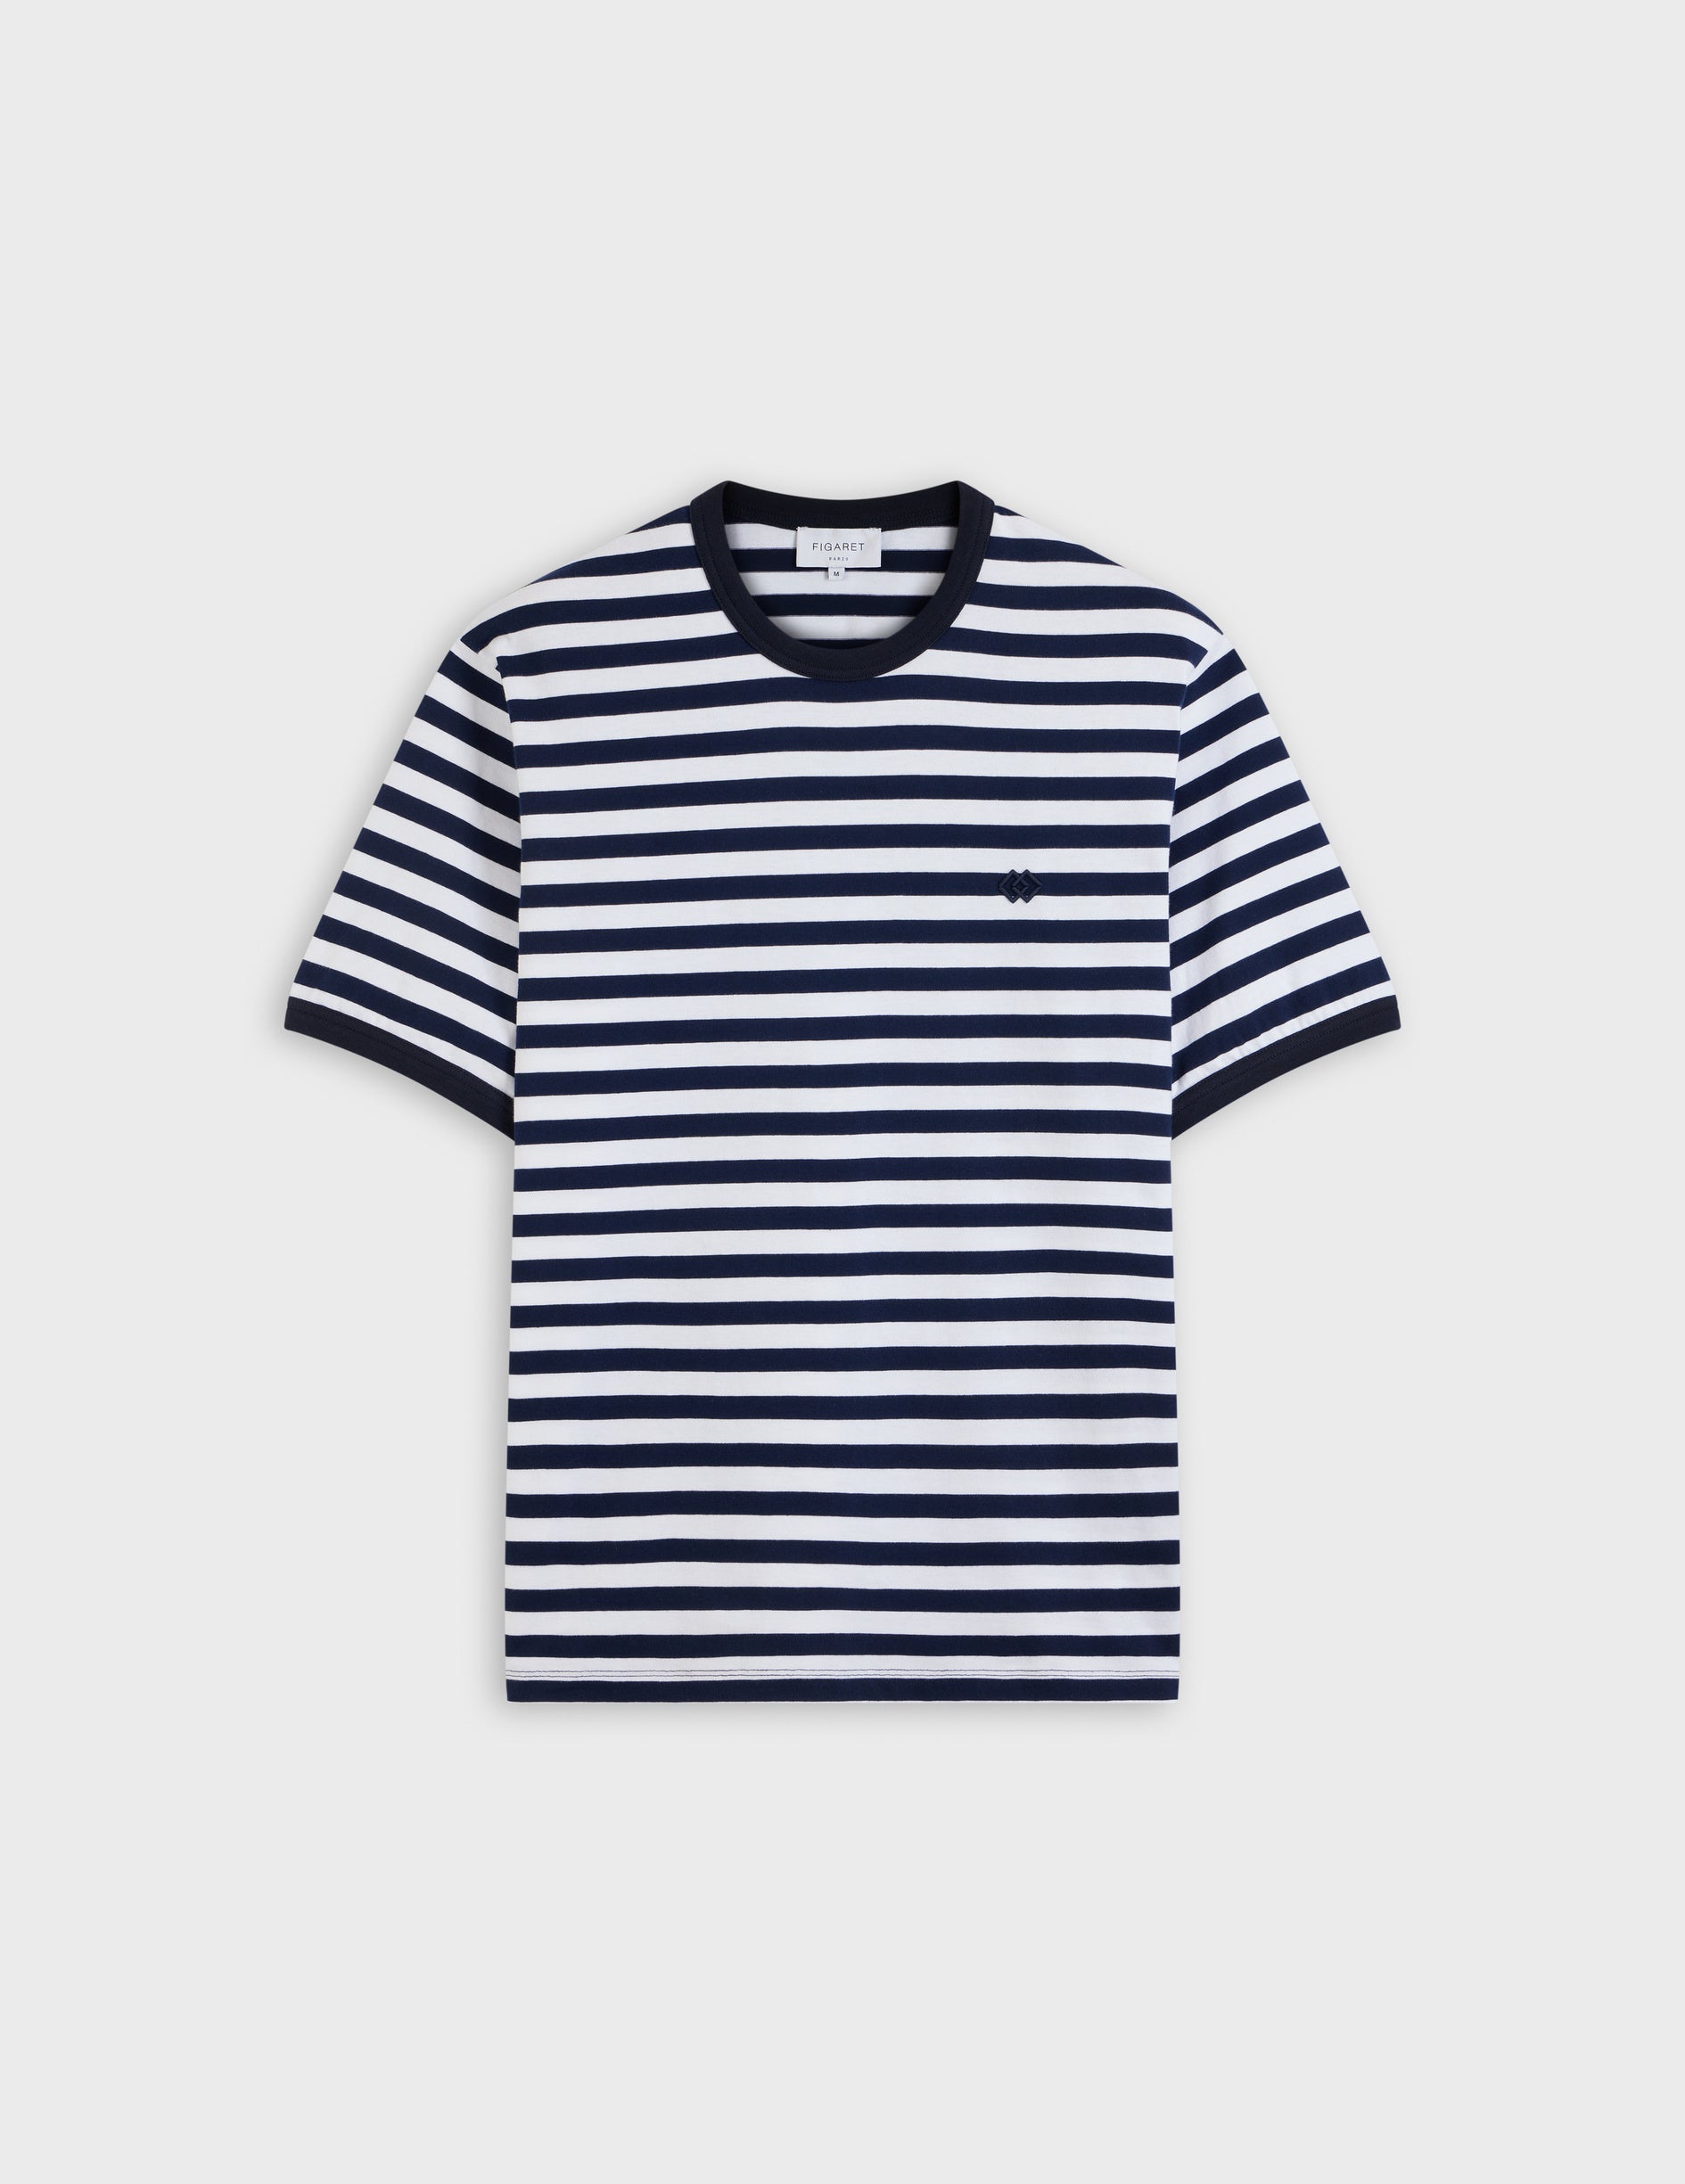 Navy striped cotton Benny t-shirt